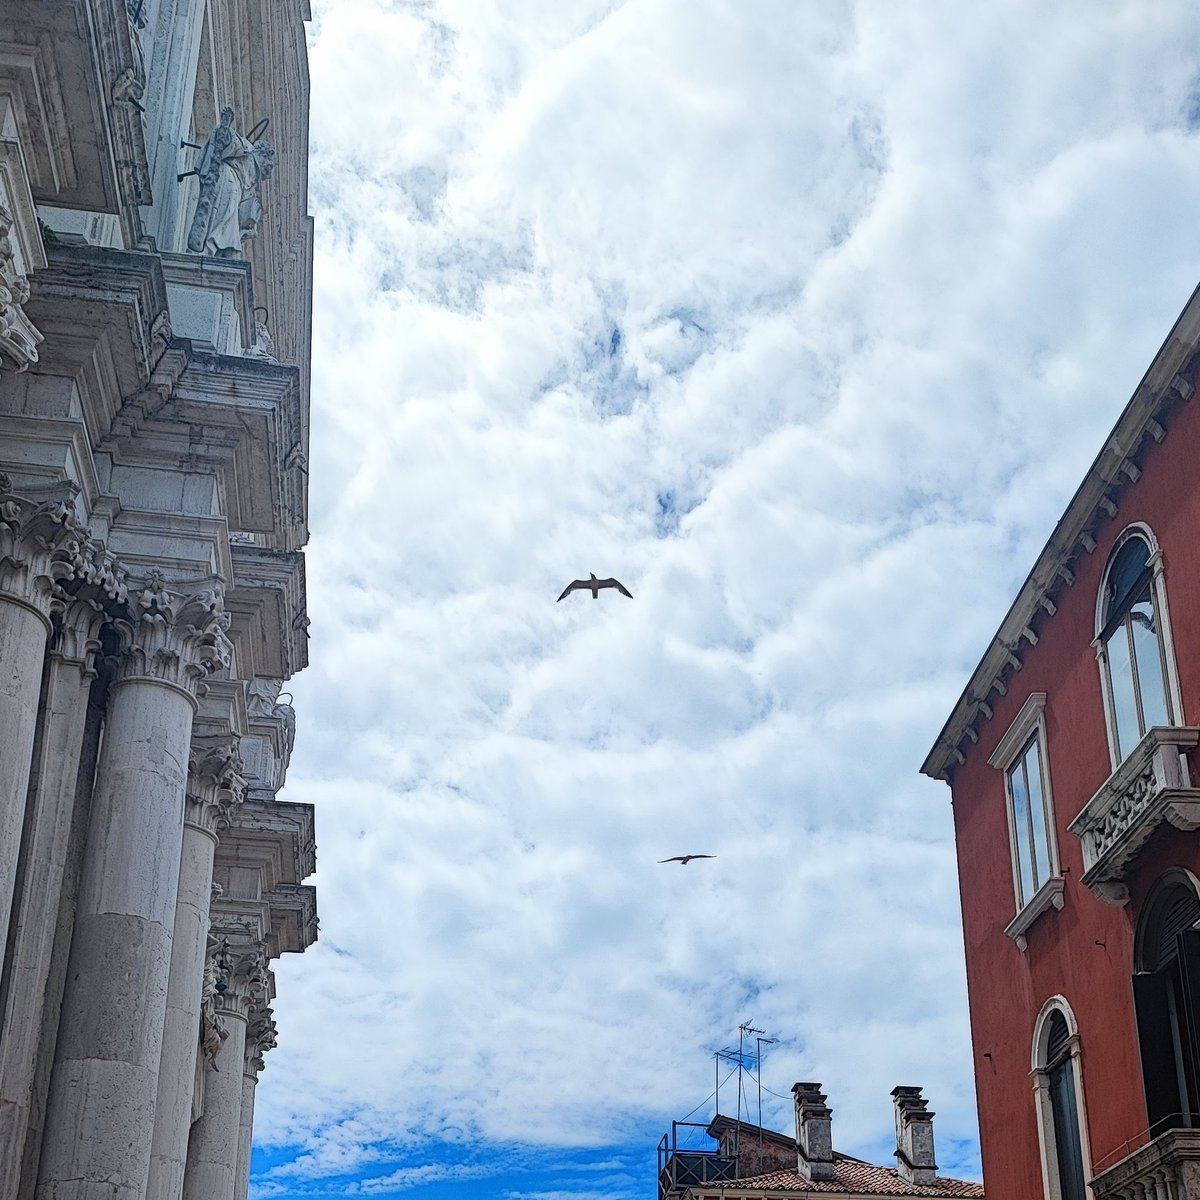 'My country is where the most beautiful clouds pass.'
-Jules Renard
Good morning #Venice!

#aphotoofveniceaday #askmeaboutvenice #veniceblogger #veniceblog #베니스 #venicephotos #venicecolors #venicecanals #veniceitaly #slowvenice #secretvenice